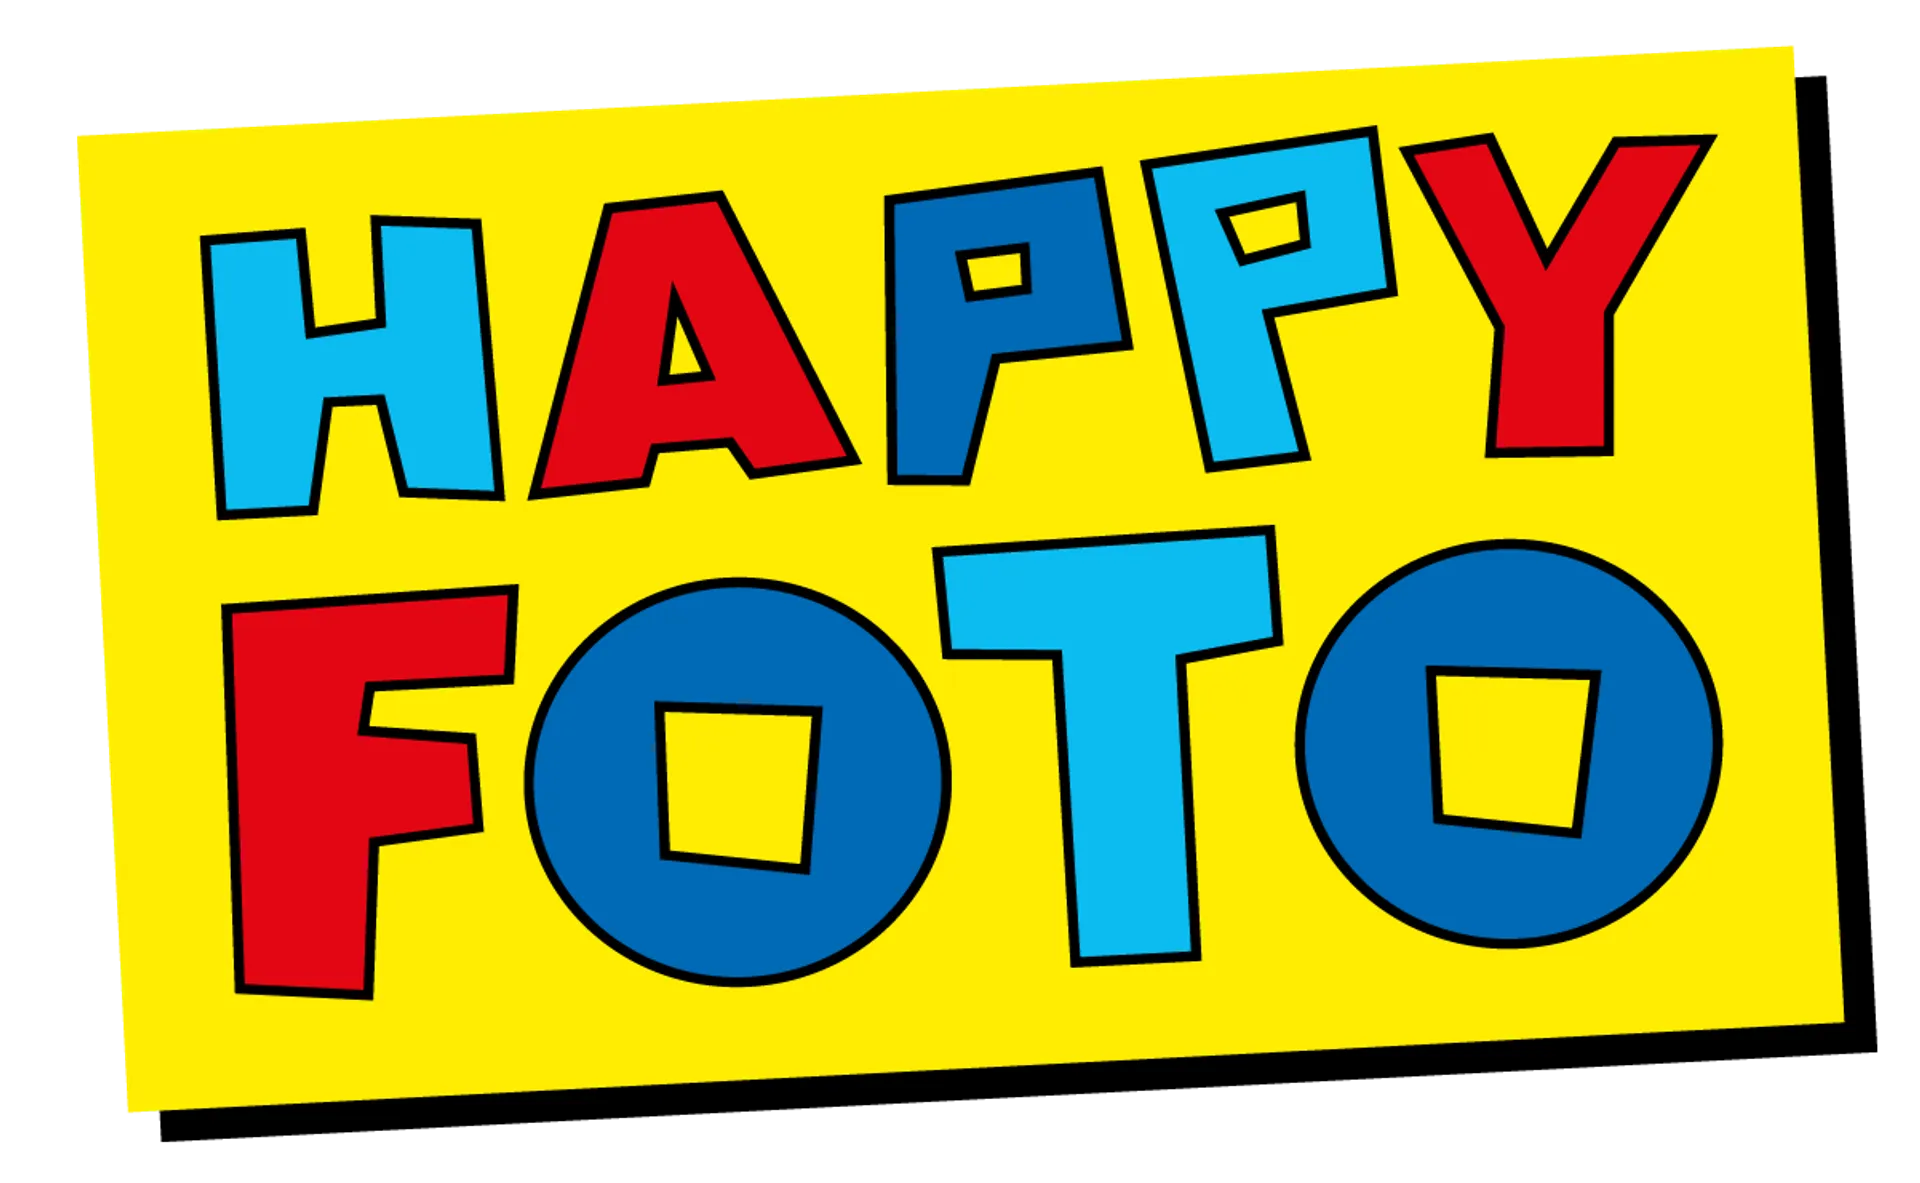 HAPPYFOTO logo die aktuell Flugblatt